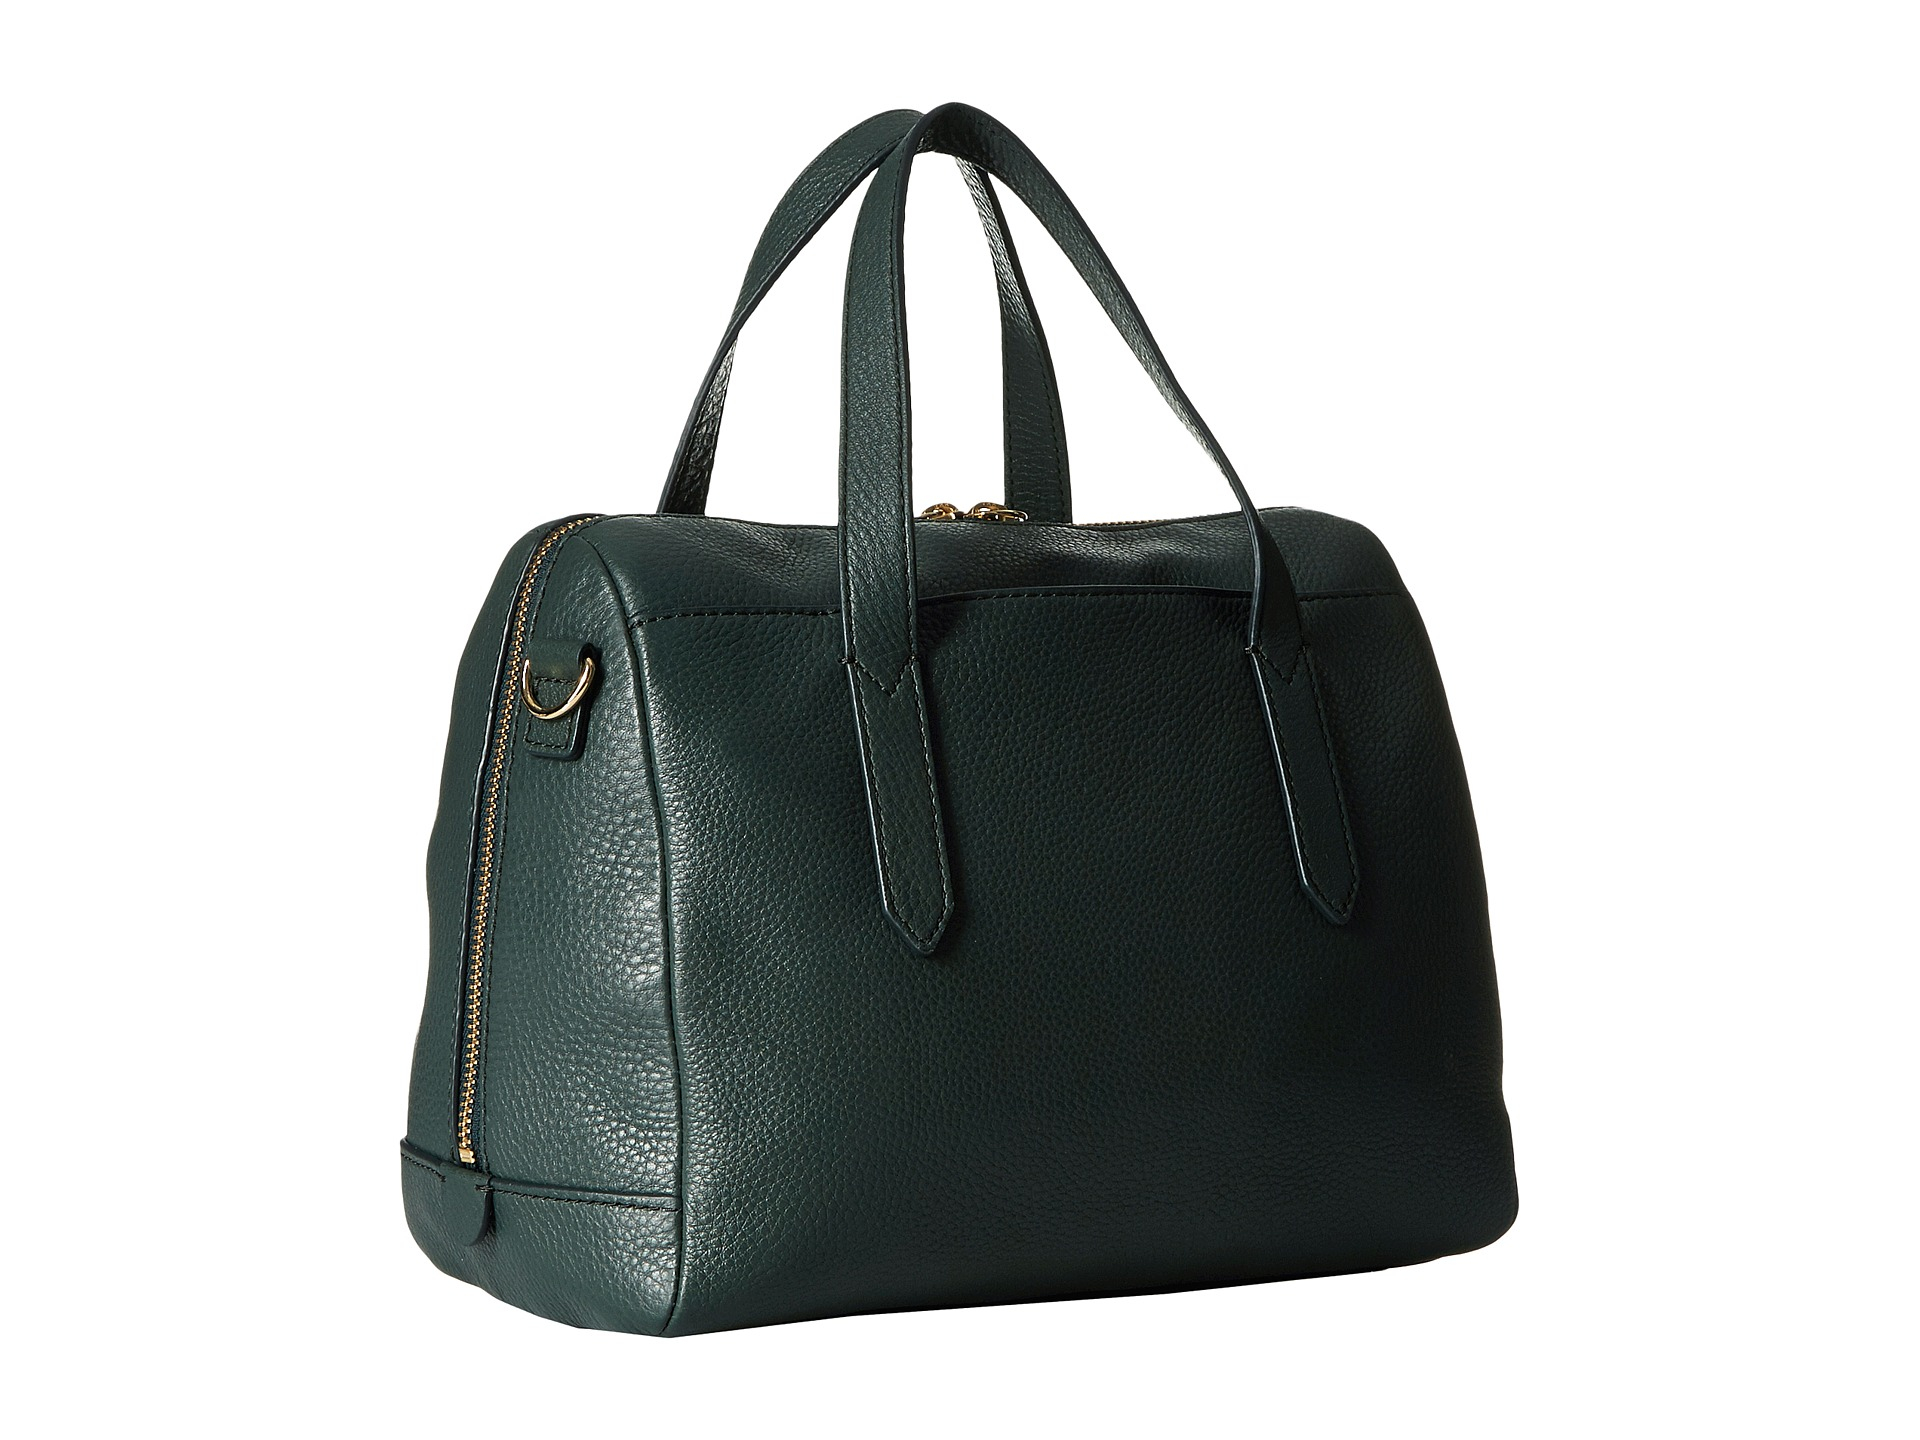 FOSSIL SYDNEY Raisin Leather Satchel Handbag Crossbody Purse Burgundy  Maroon | eBay